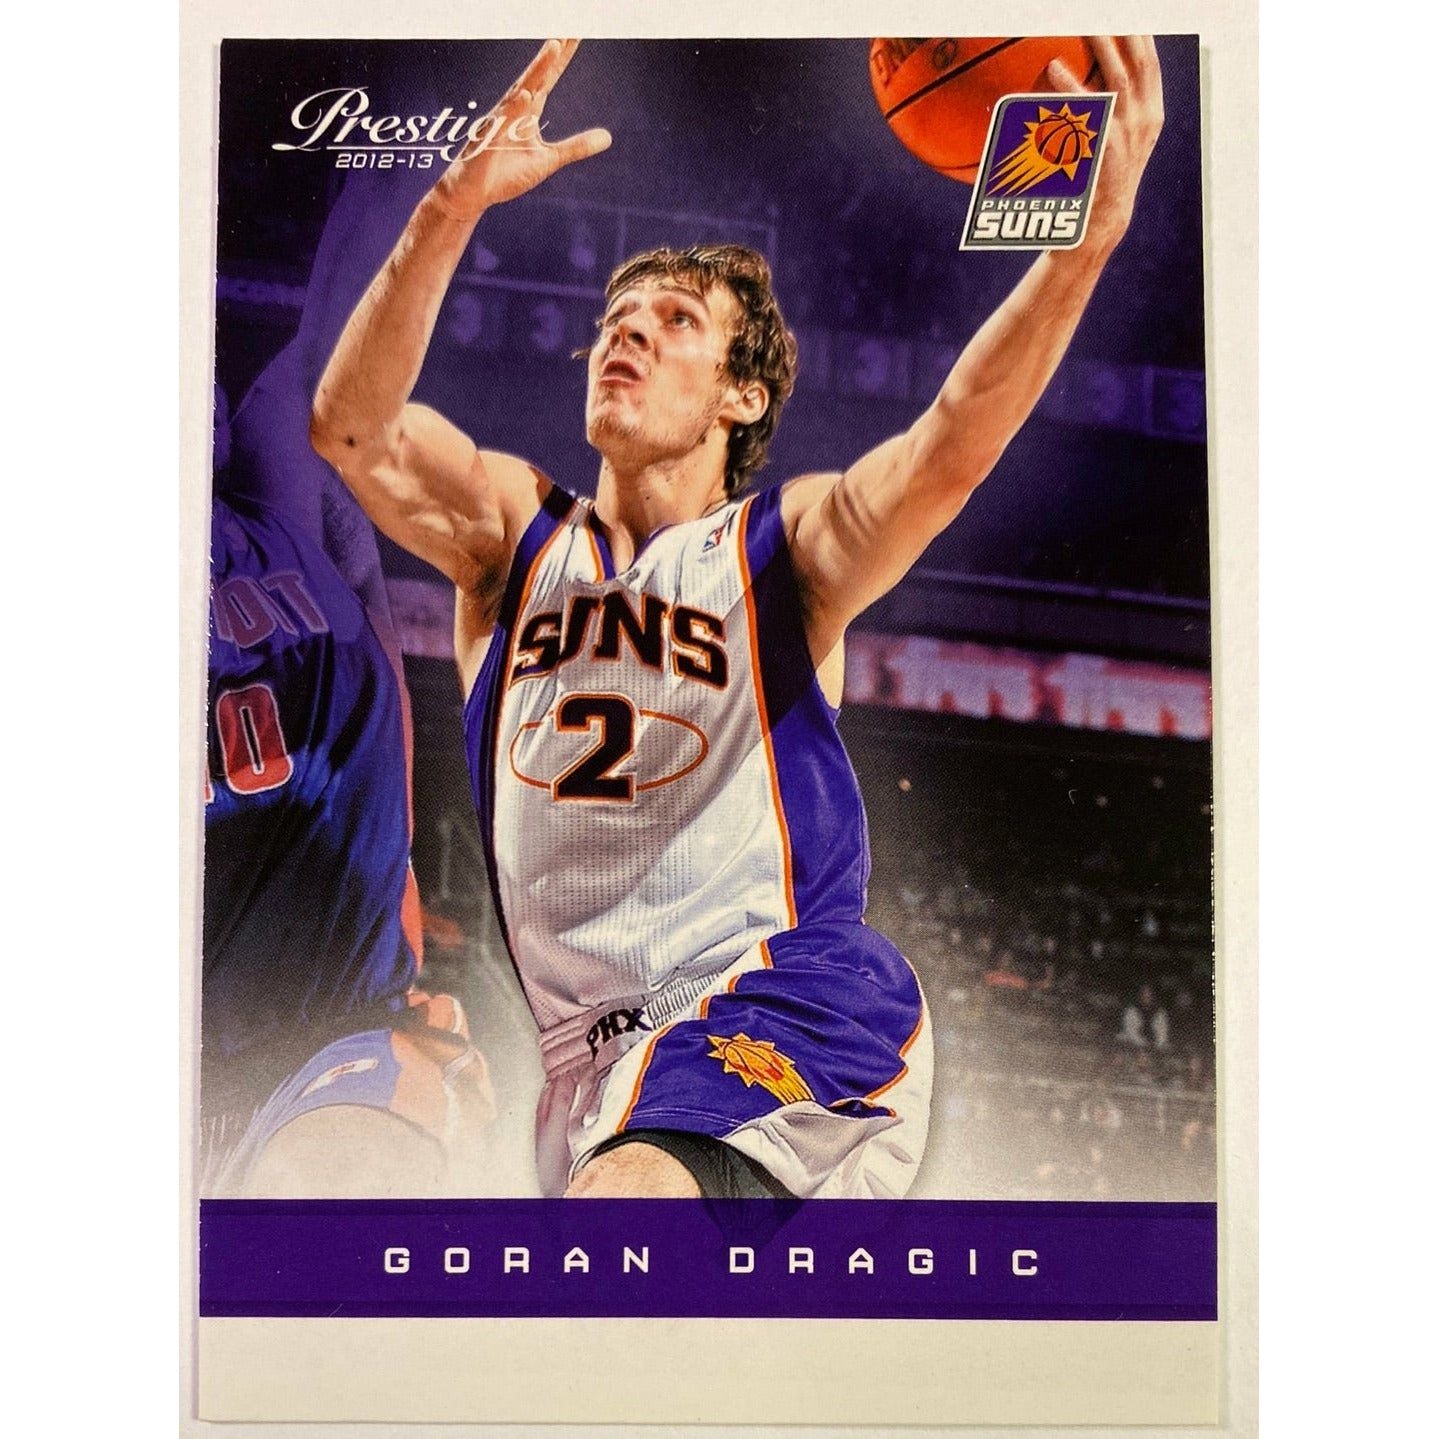  2012-13 Prestige Goran Dragic  Local Legends Cards & Collectibles